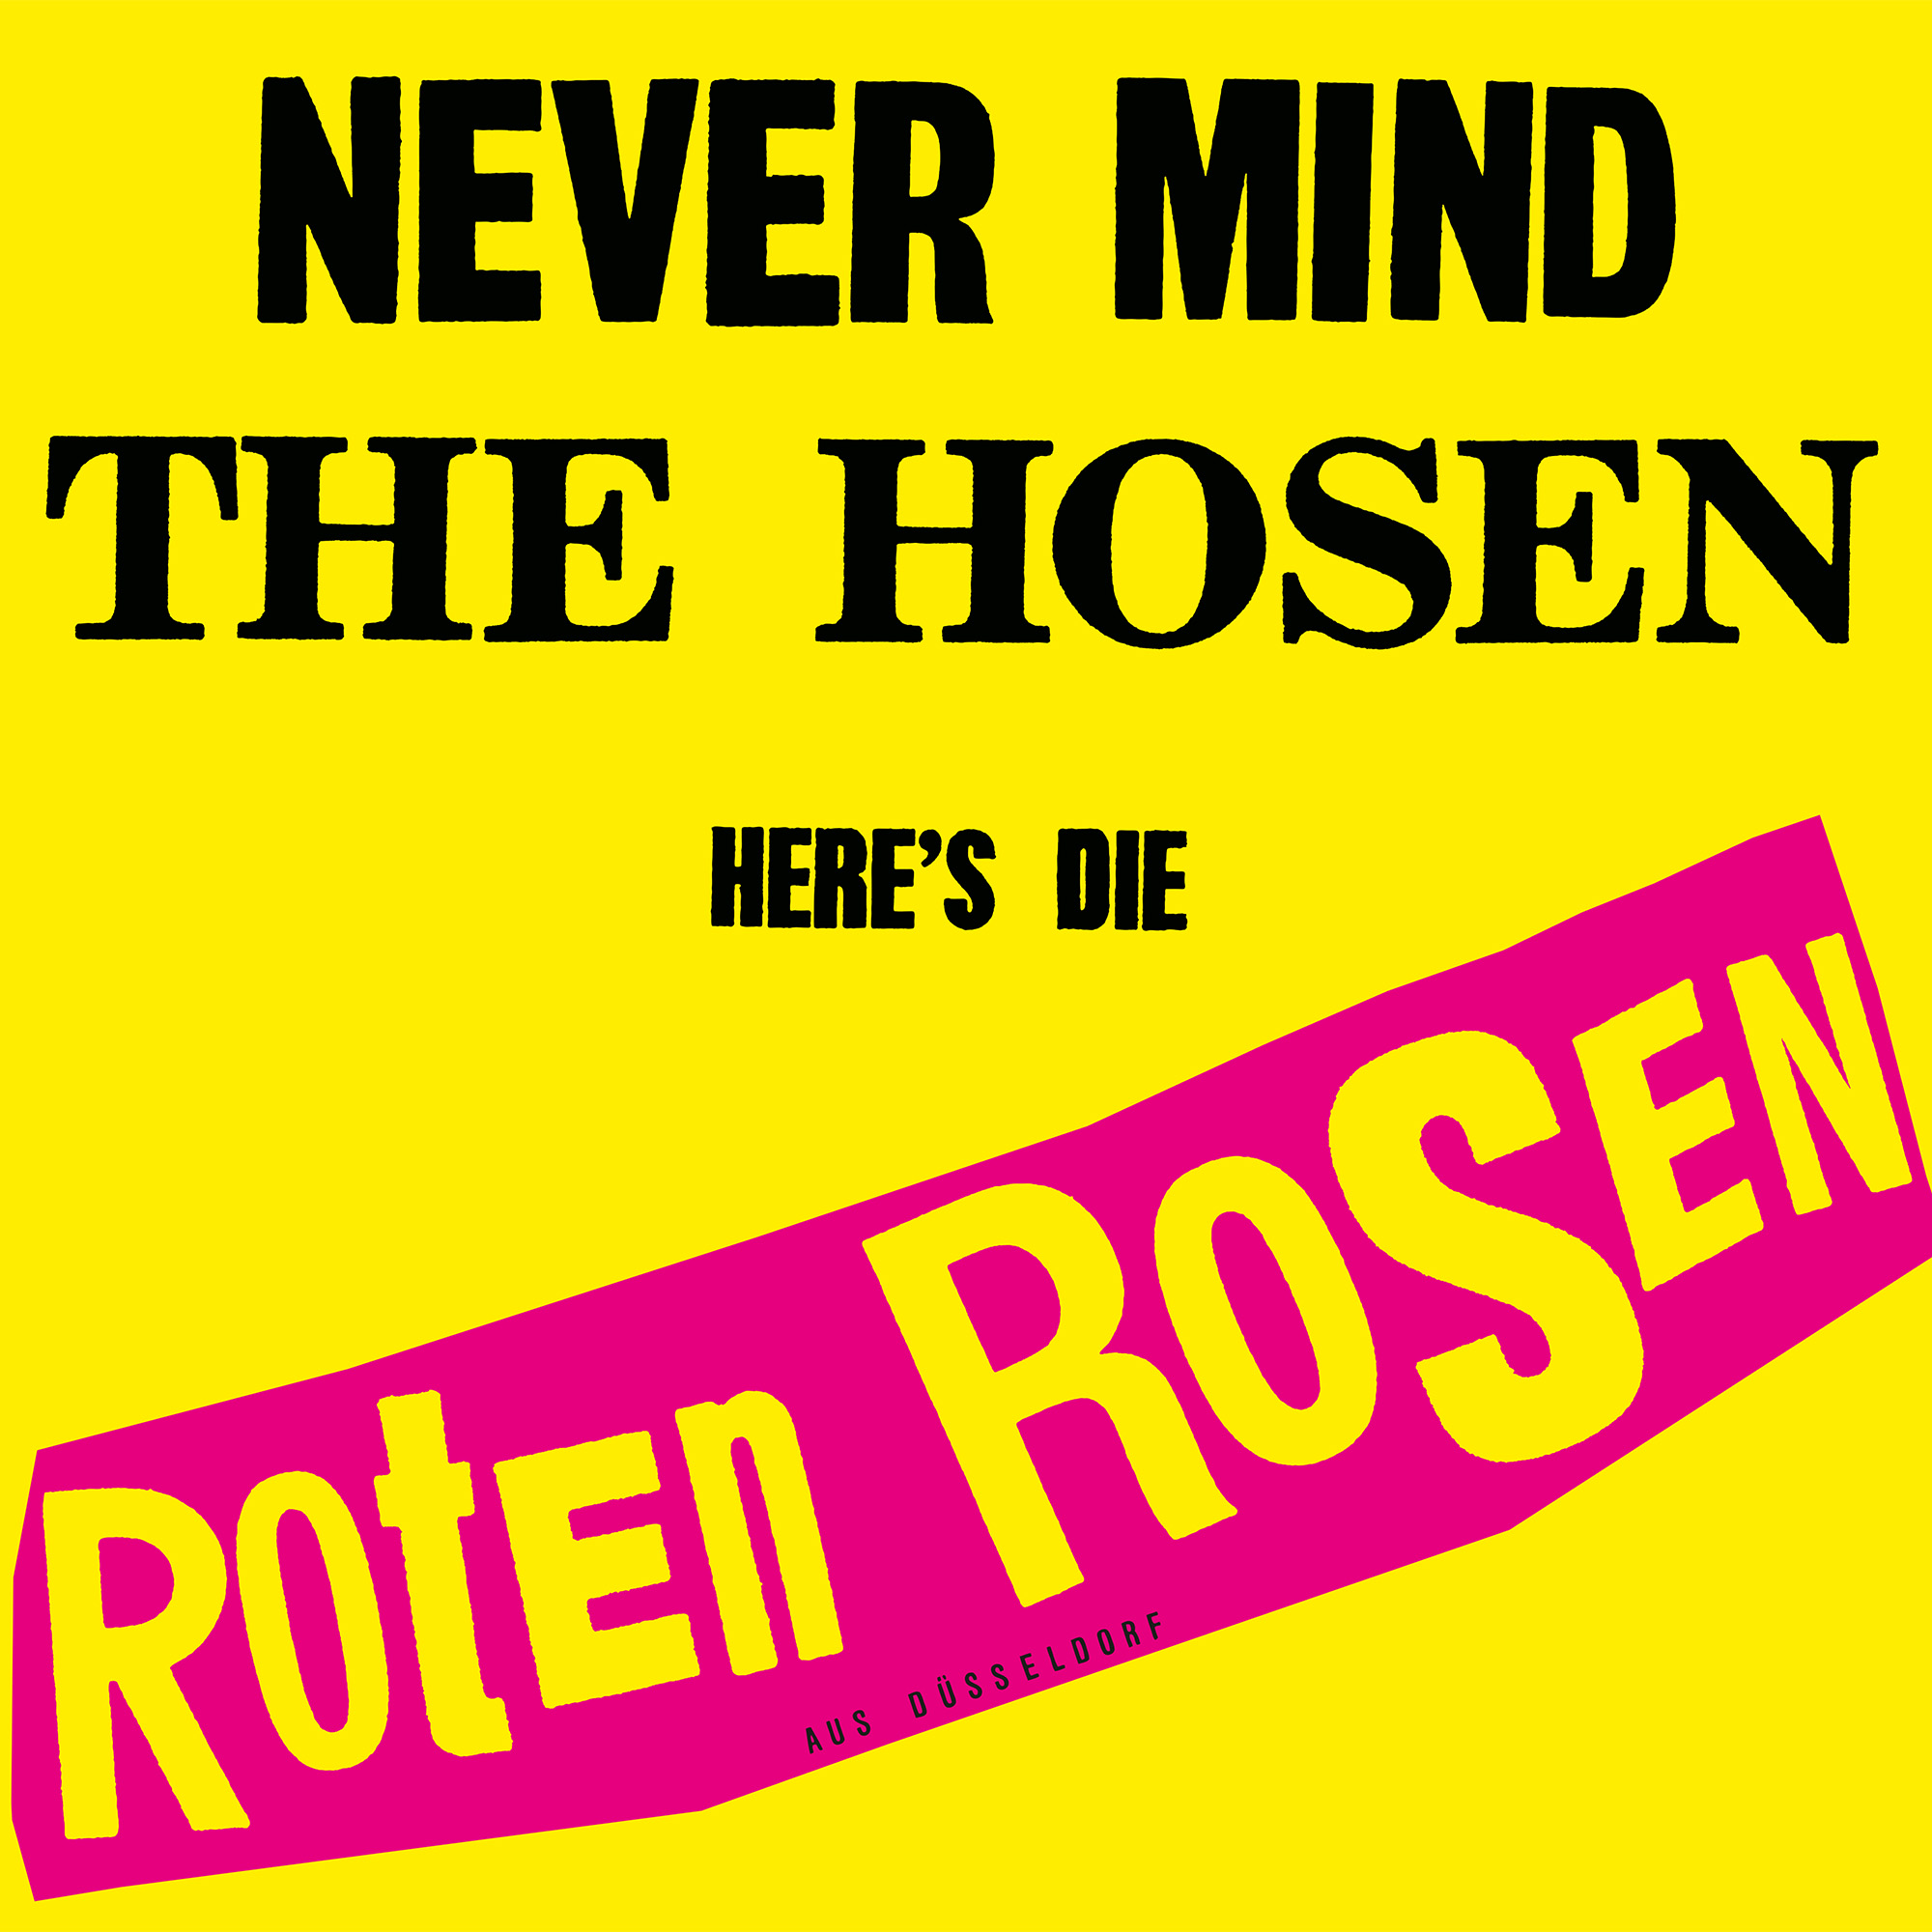 Mind Roten The - Rosen Die Die Rosen - Roten (Vinyl) Hosen-Here\'s Never